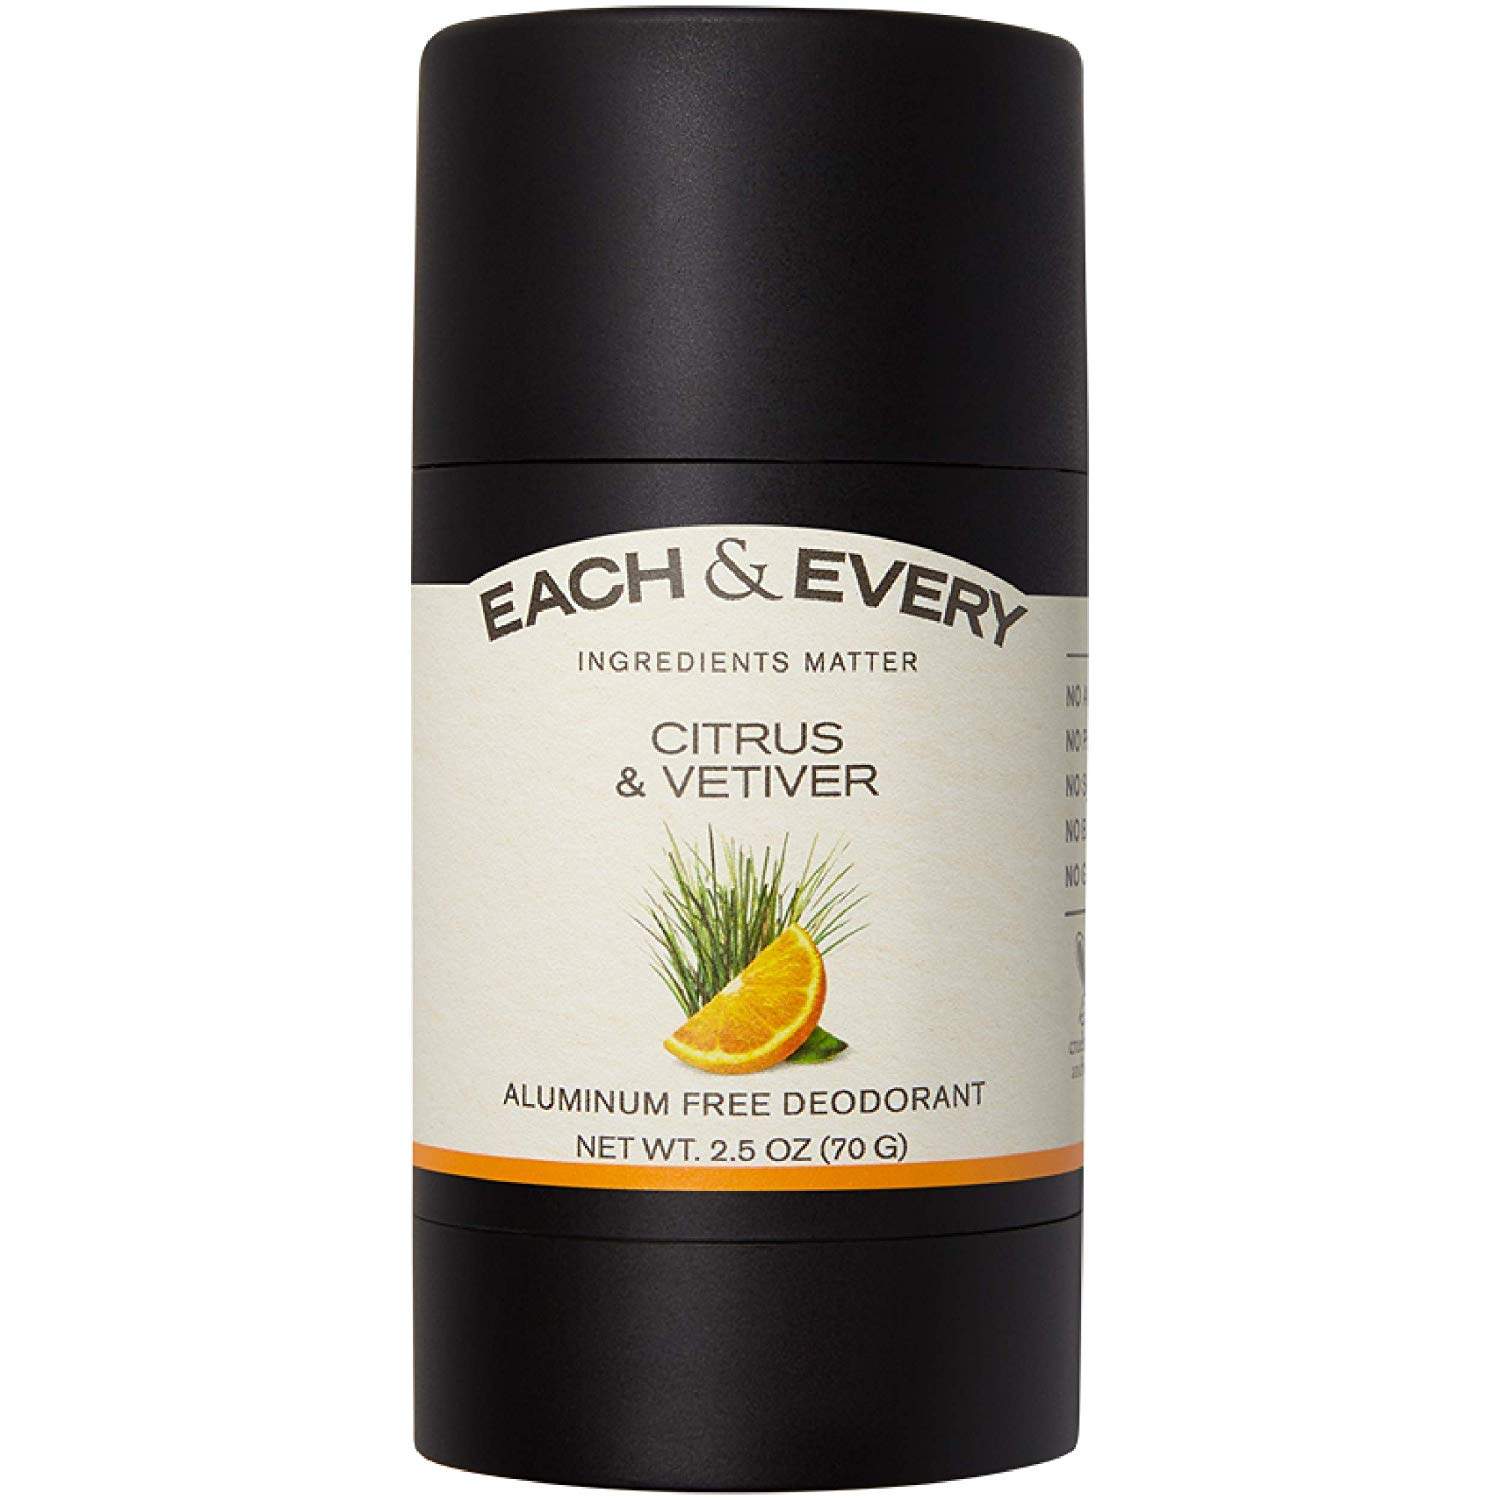 Each & Every Citrus & Vetiver Deodorant